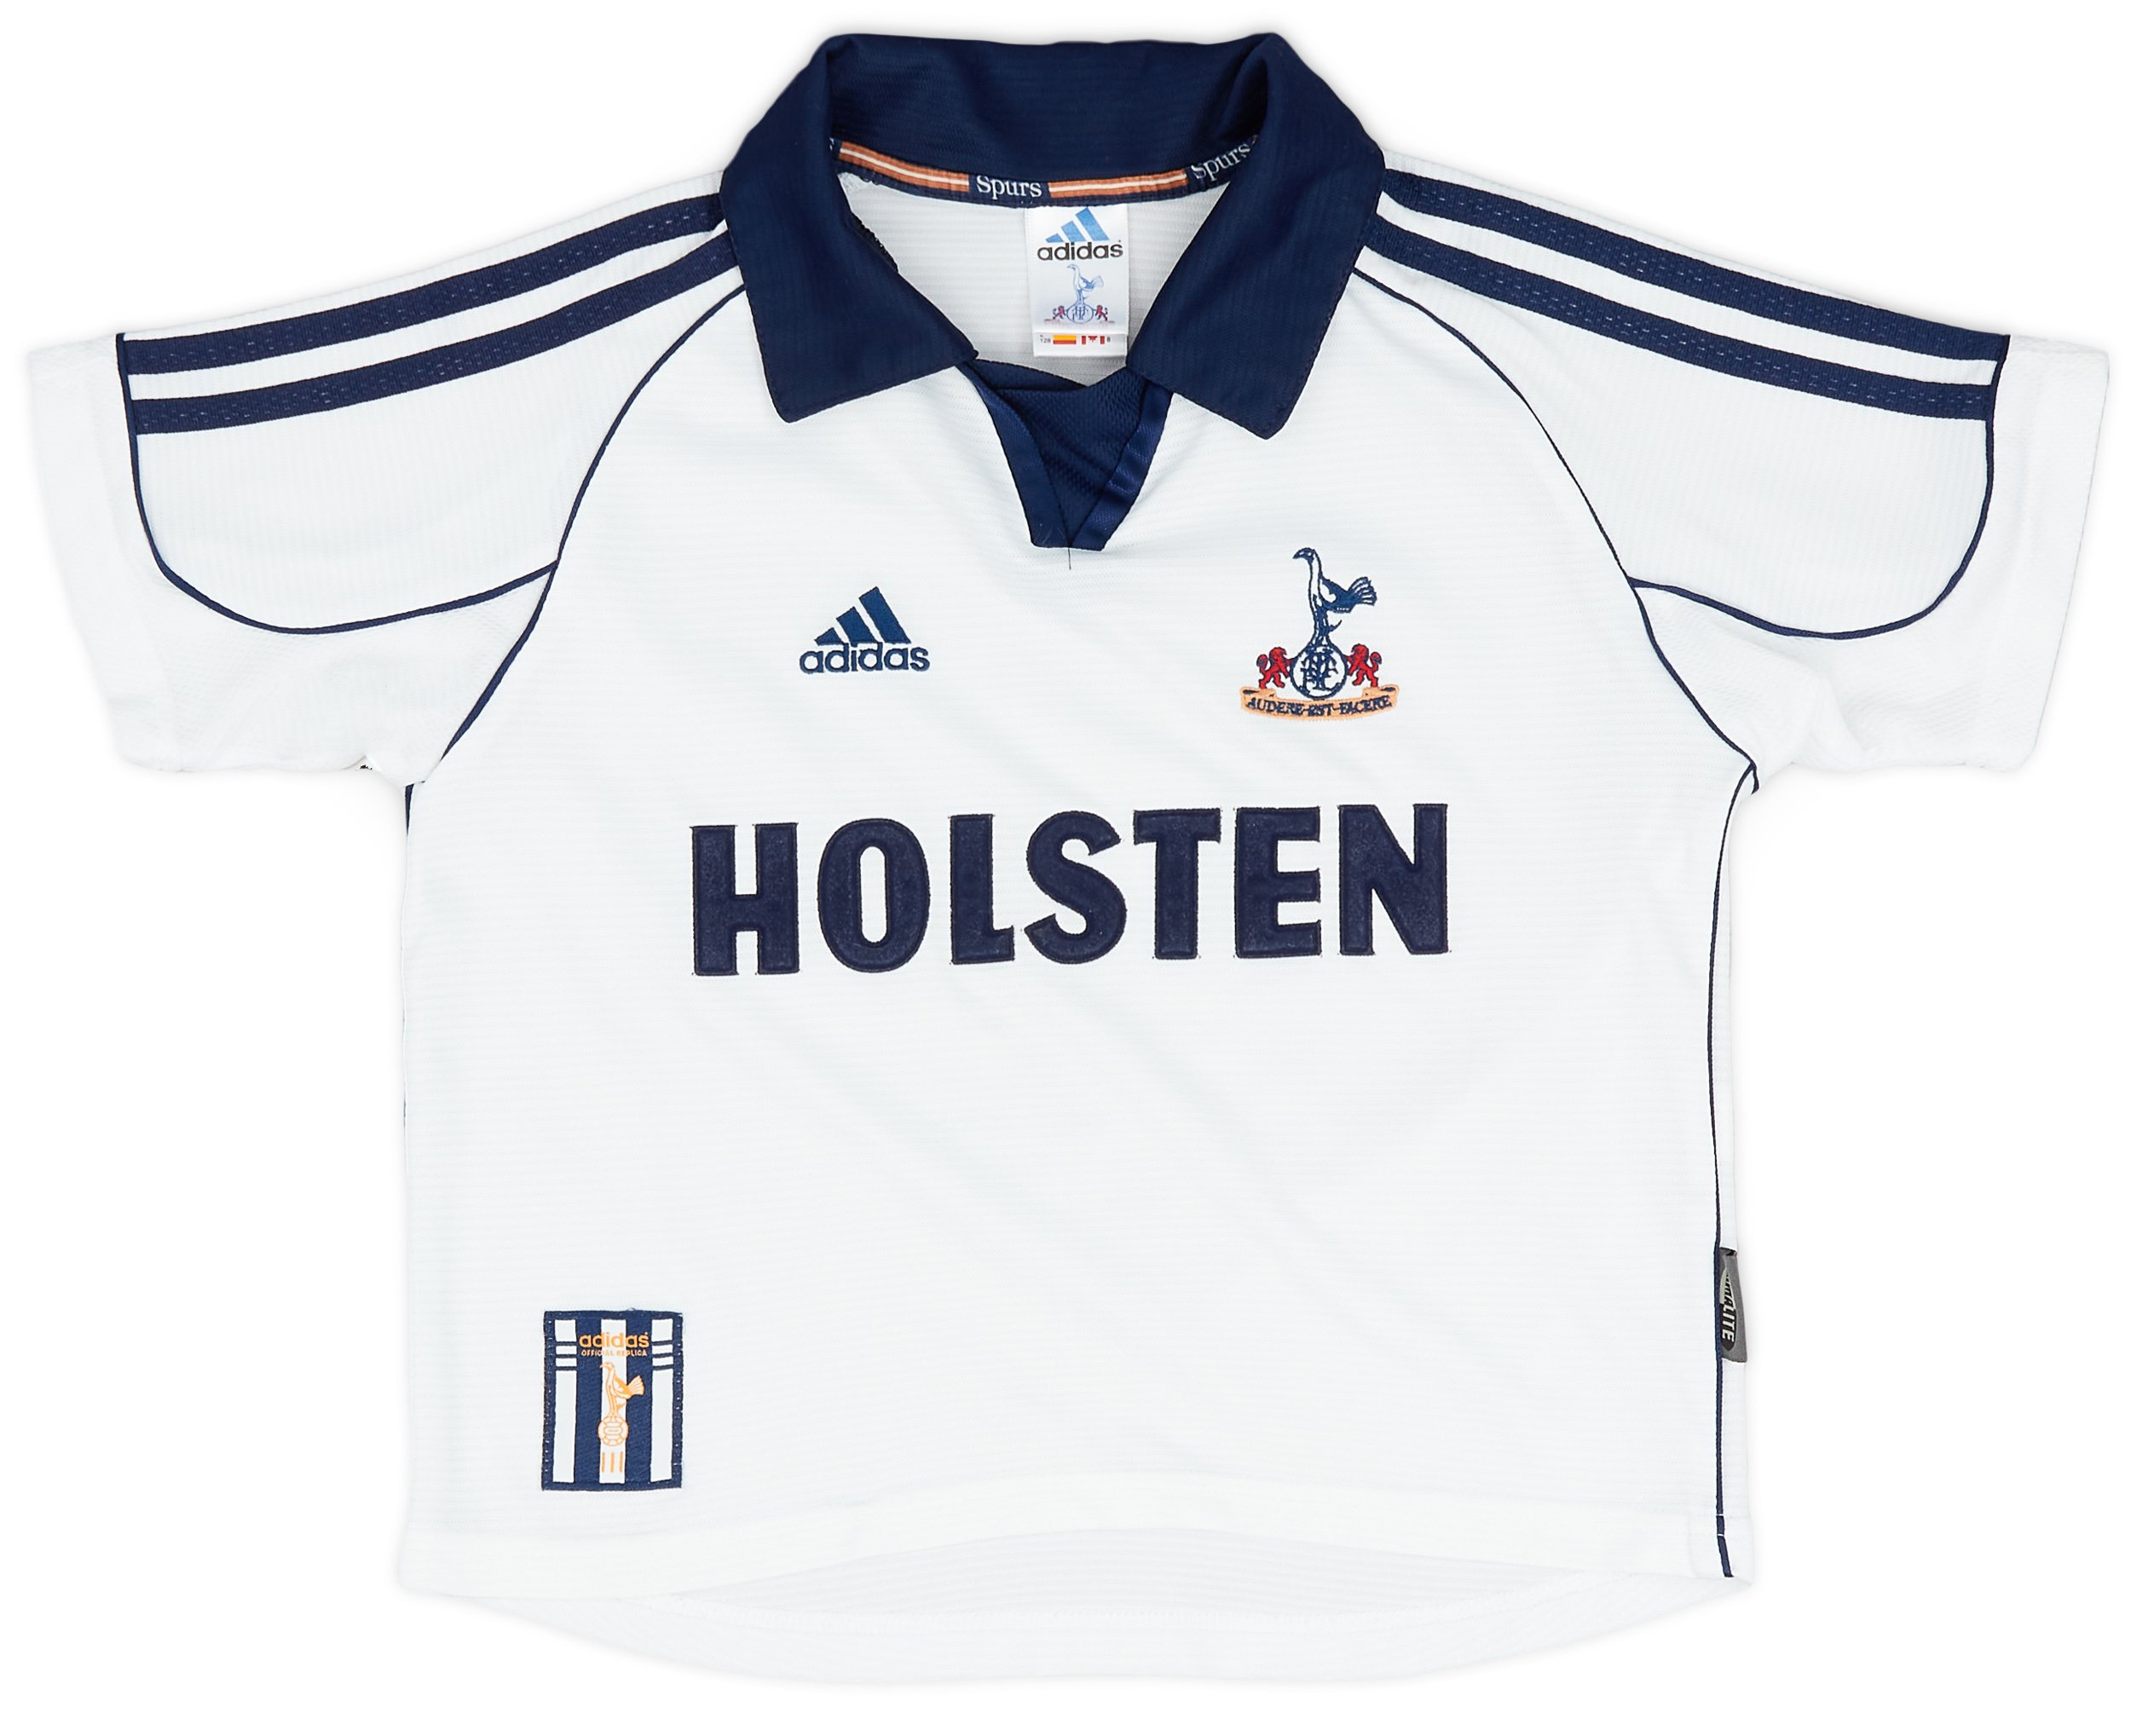 Tottenham-Hotspur-Spurs-1999-2000-adidas-home-white-socks-01